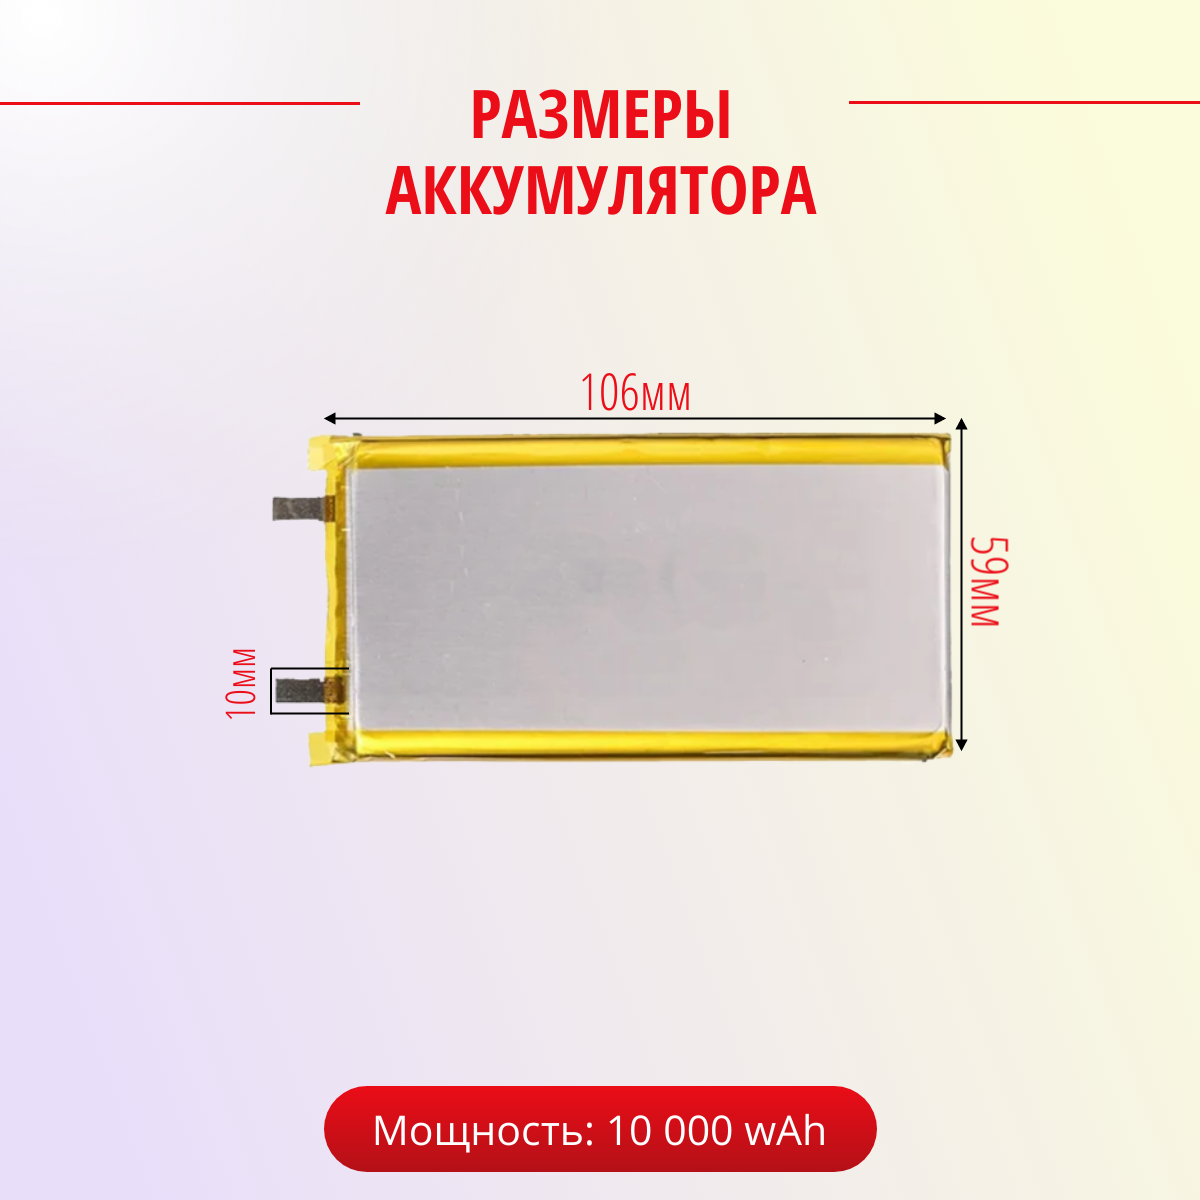 Аккумулятор Run Energy для повербанка 1260110 10000mAh